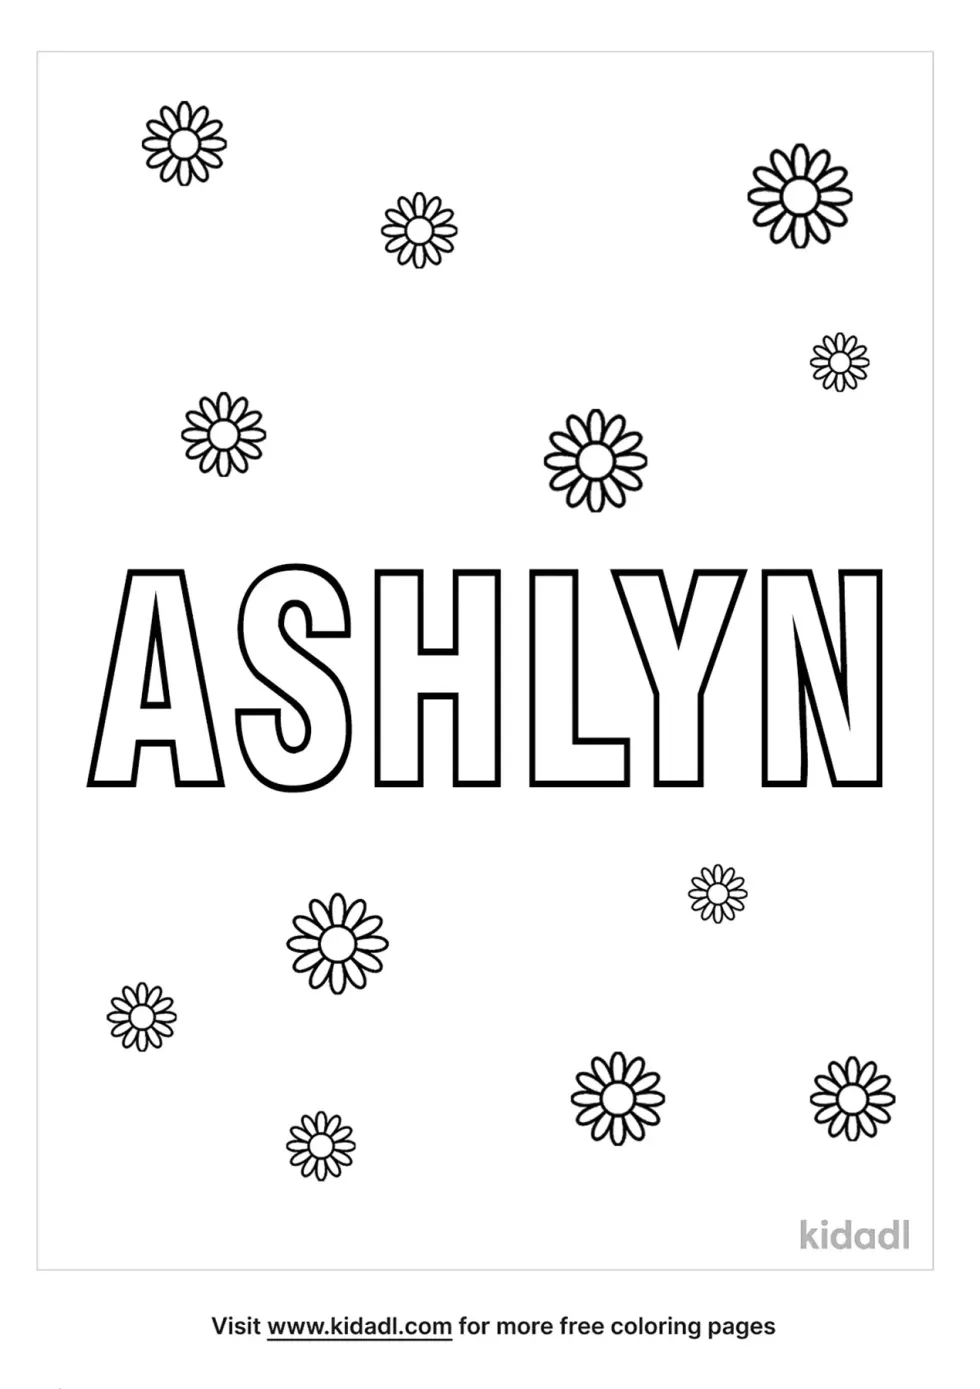 Ashlyn Name Coloring Page